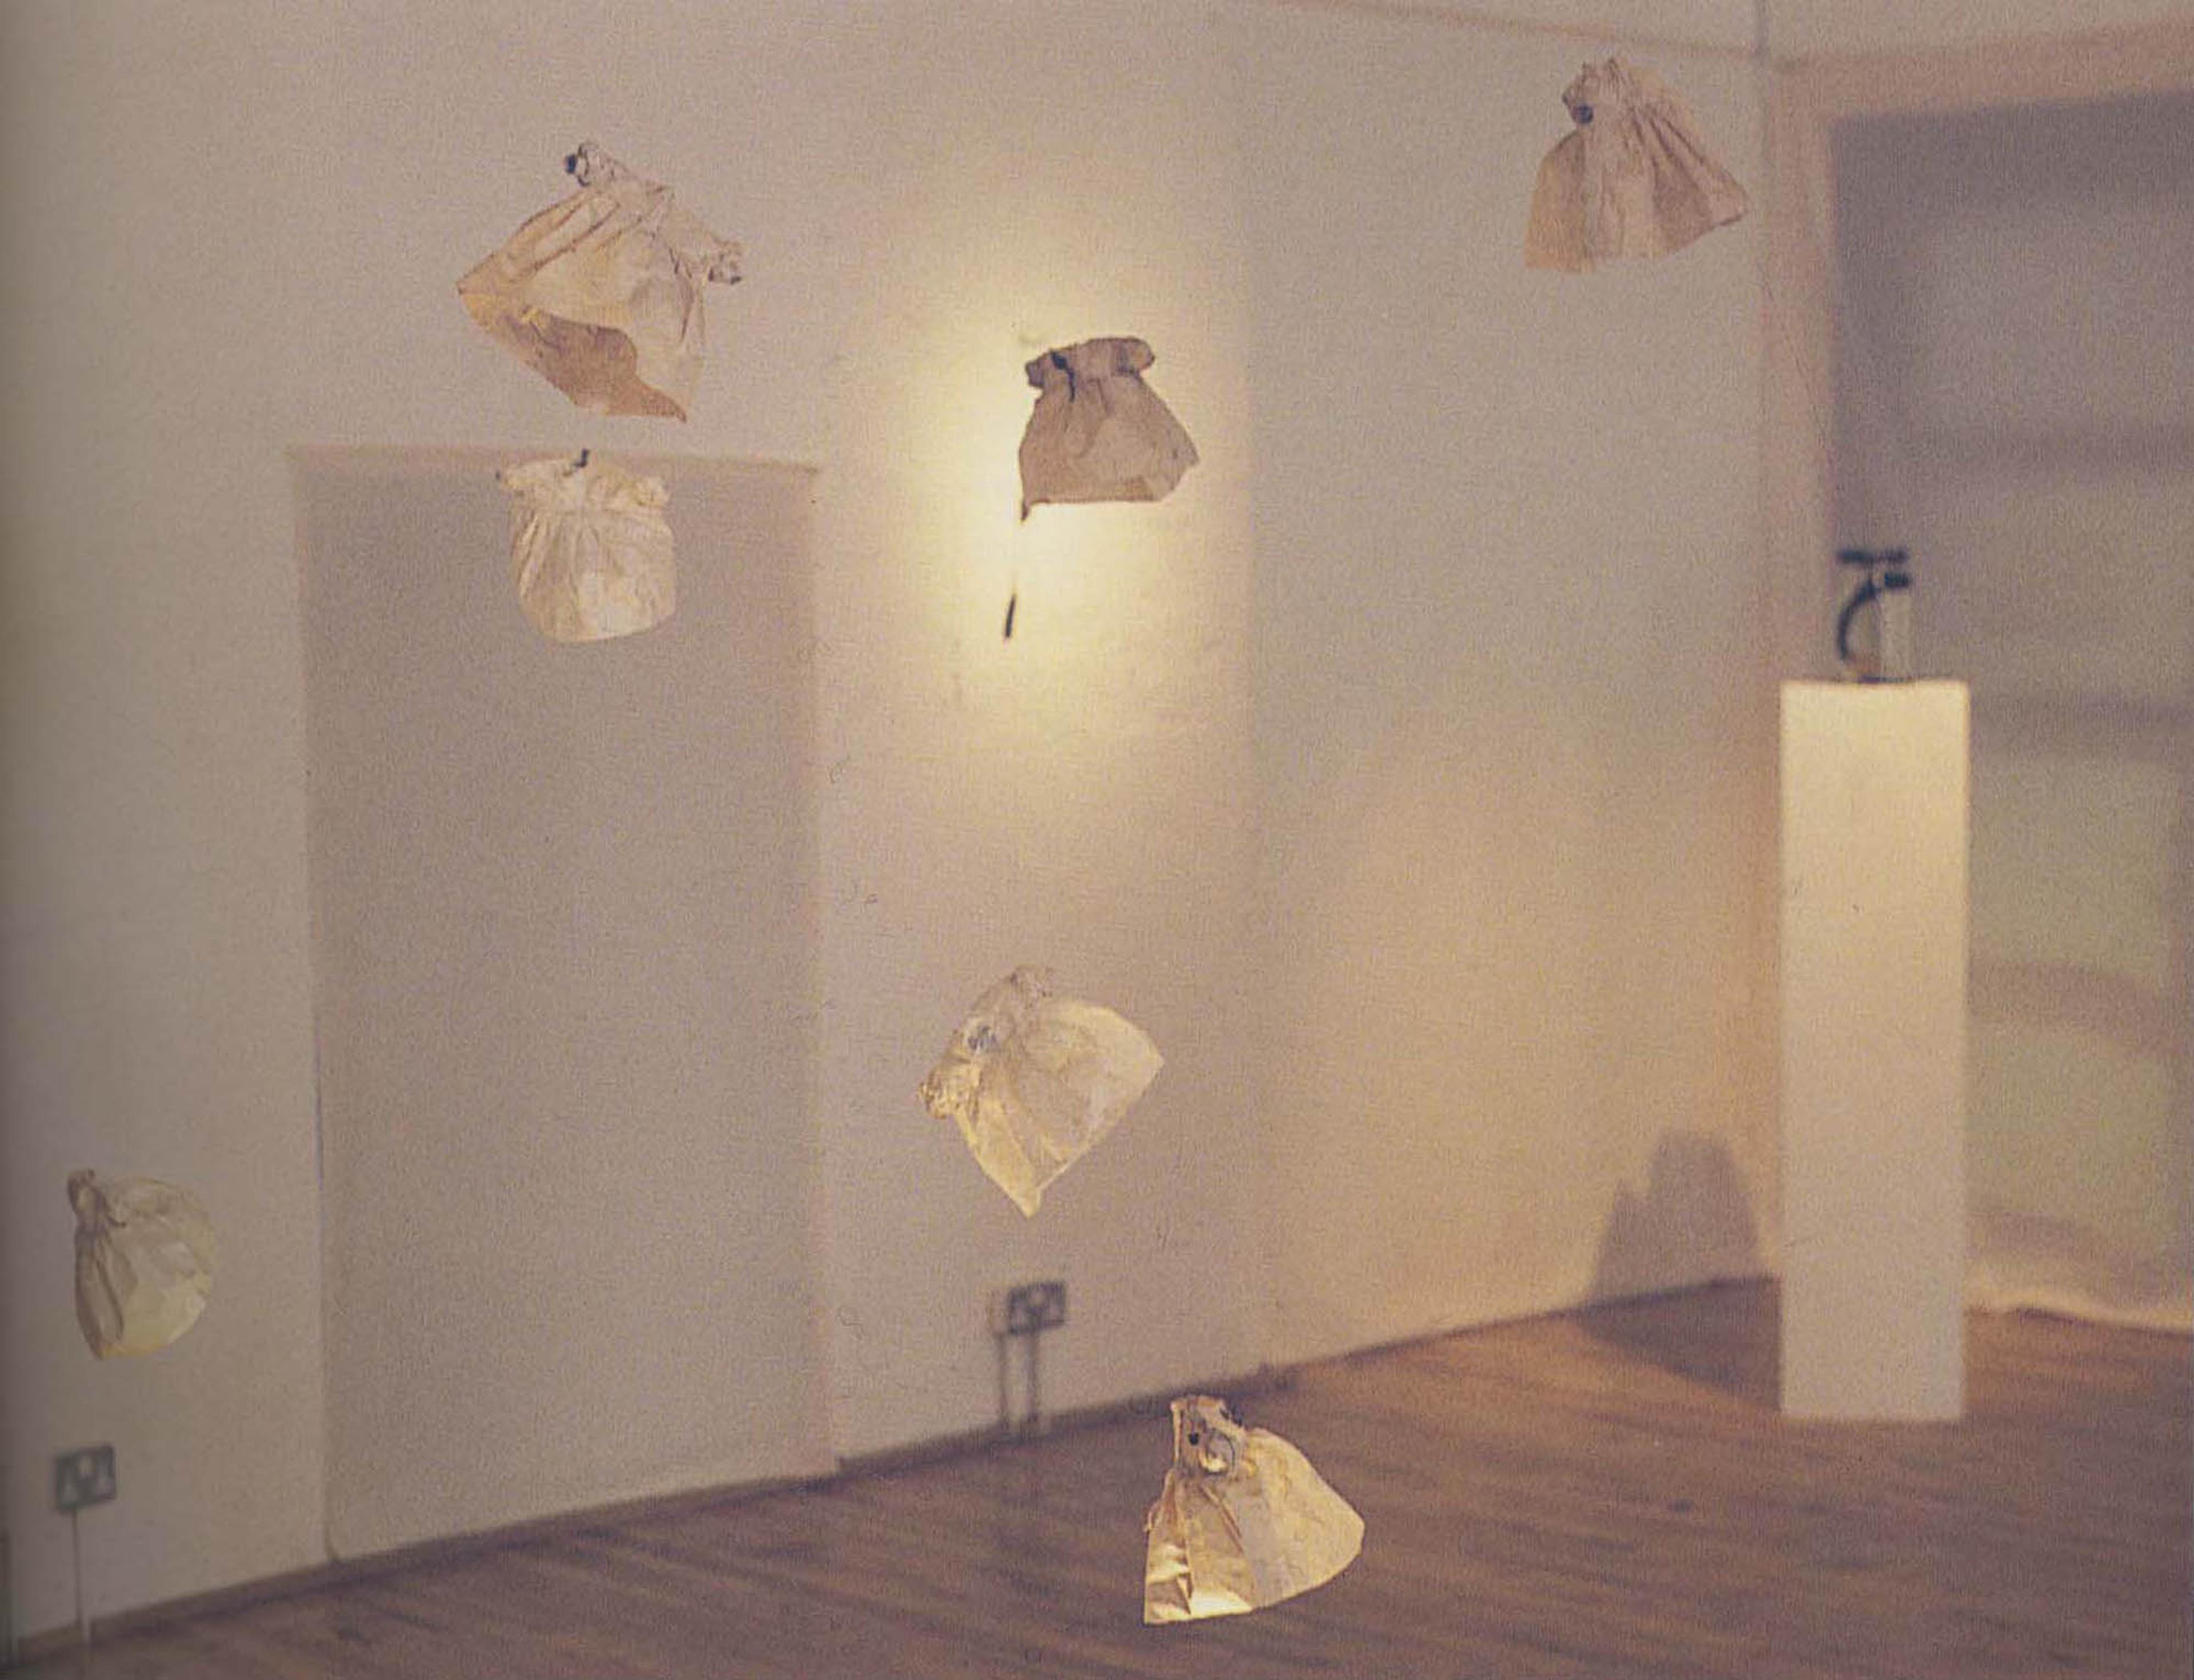 (2001) Jean Conroy, Angel, Little Dresses, 2000, bronze, mixed media installation, 29.9 x 5 cm.